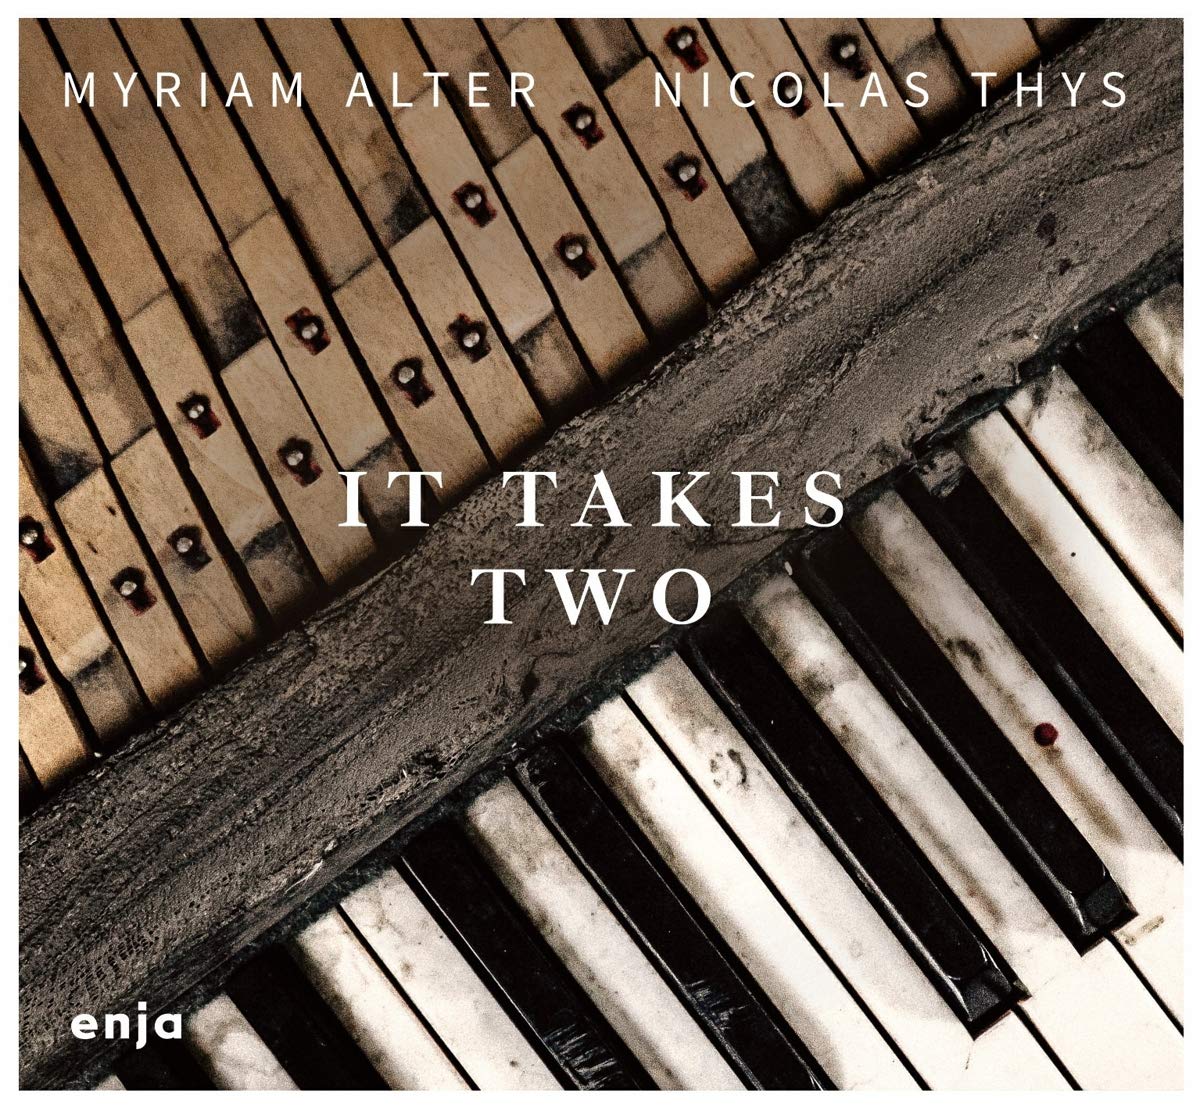 MYRIAM ALTER - Myriam Alter / Nicolas Thys : It Takes Two cover 